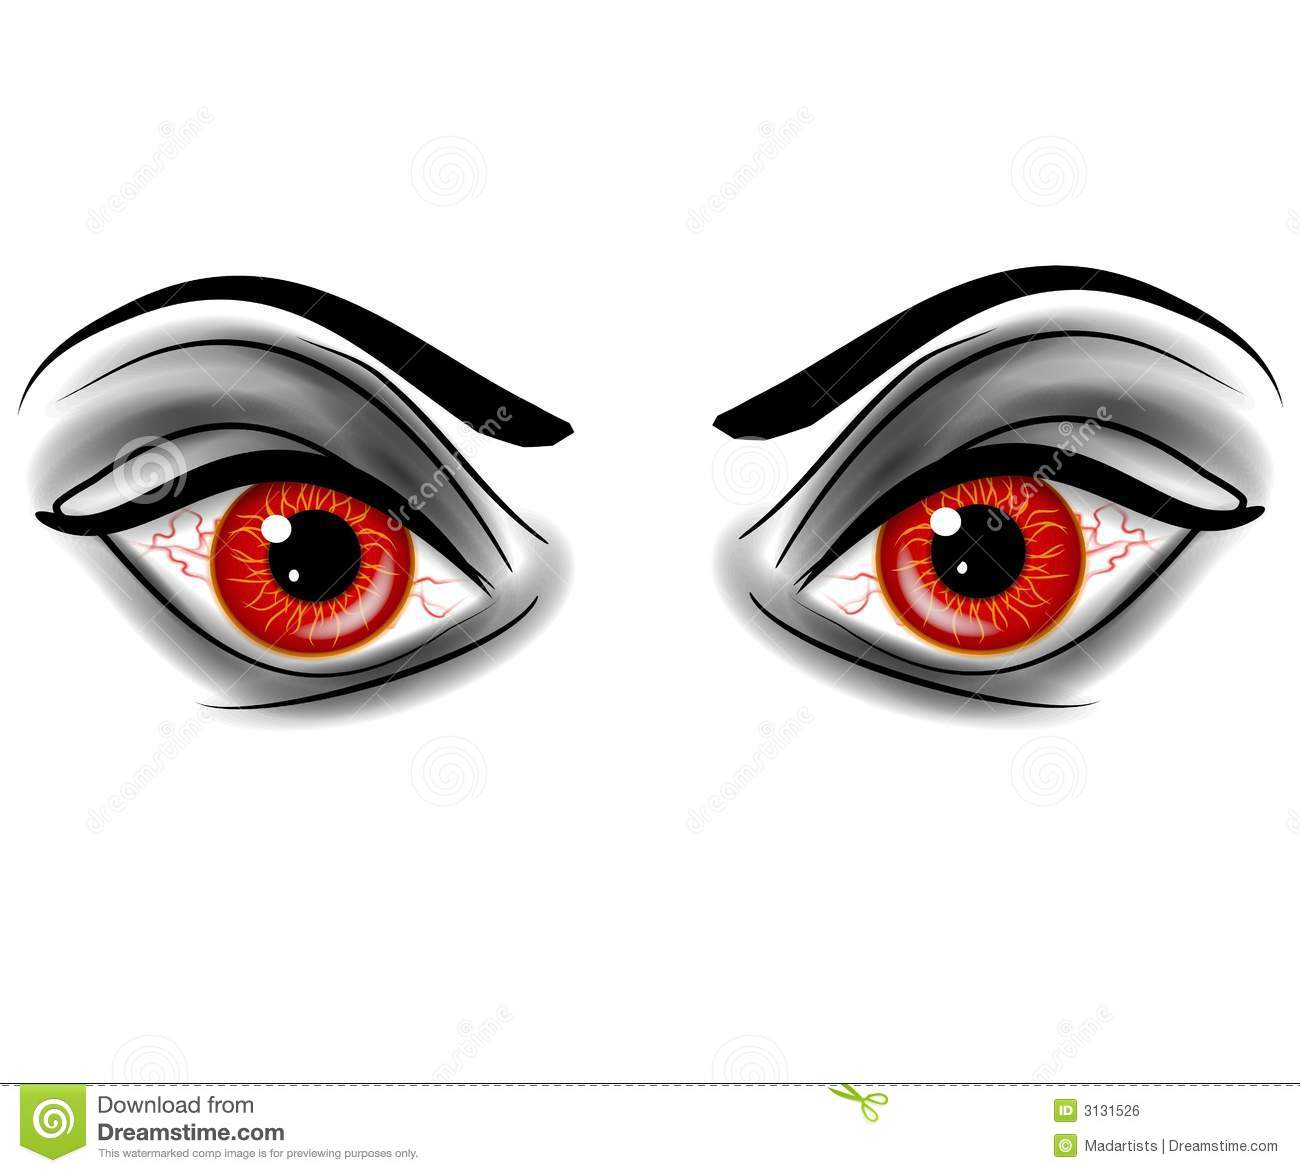 Clip Art Illustration Of A Pair Of Evil Looking Devil Or Demonic Eyes